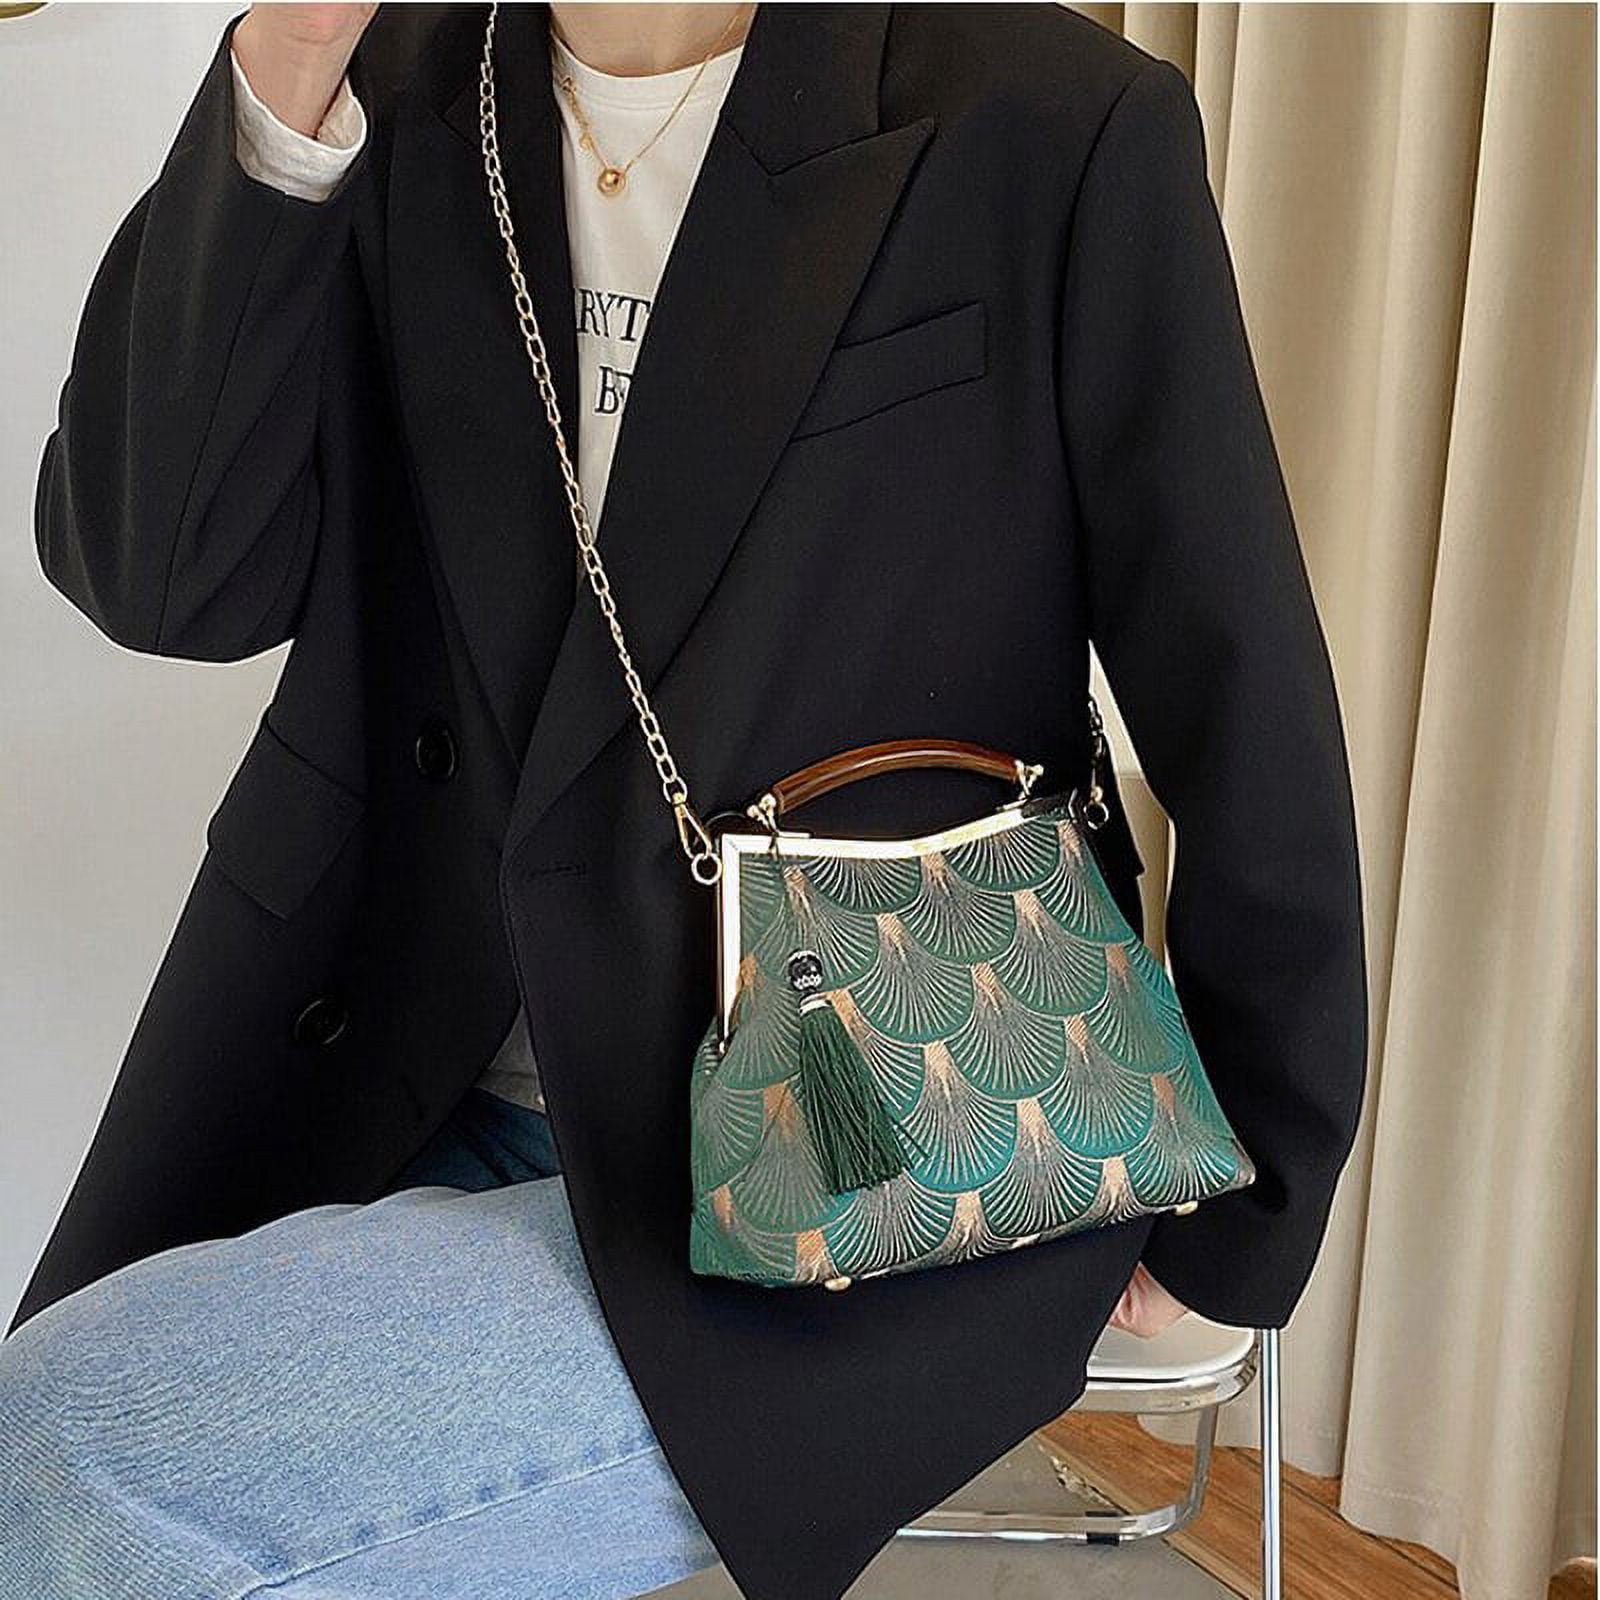 PIKADINGNIS Genuine Leather Luxury Handbags Handmade Women Shoulder Bag New  Embossed Vintage Crossbody Bags for Women Purse Women's Bag 